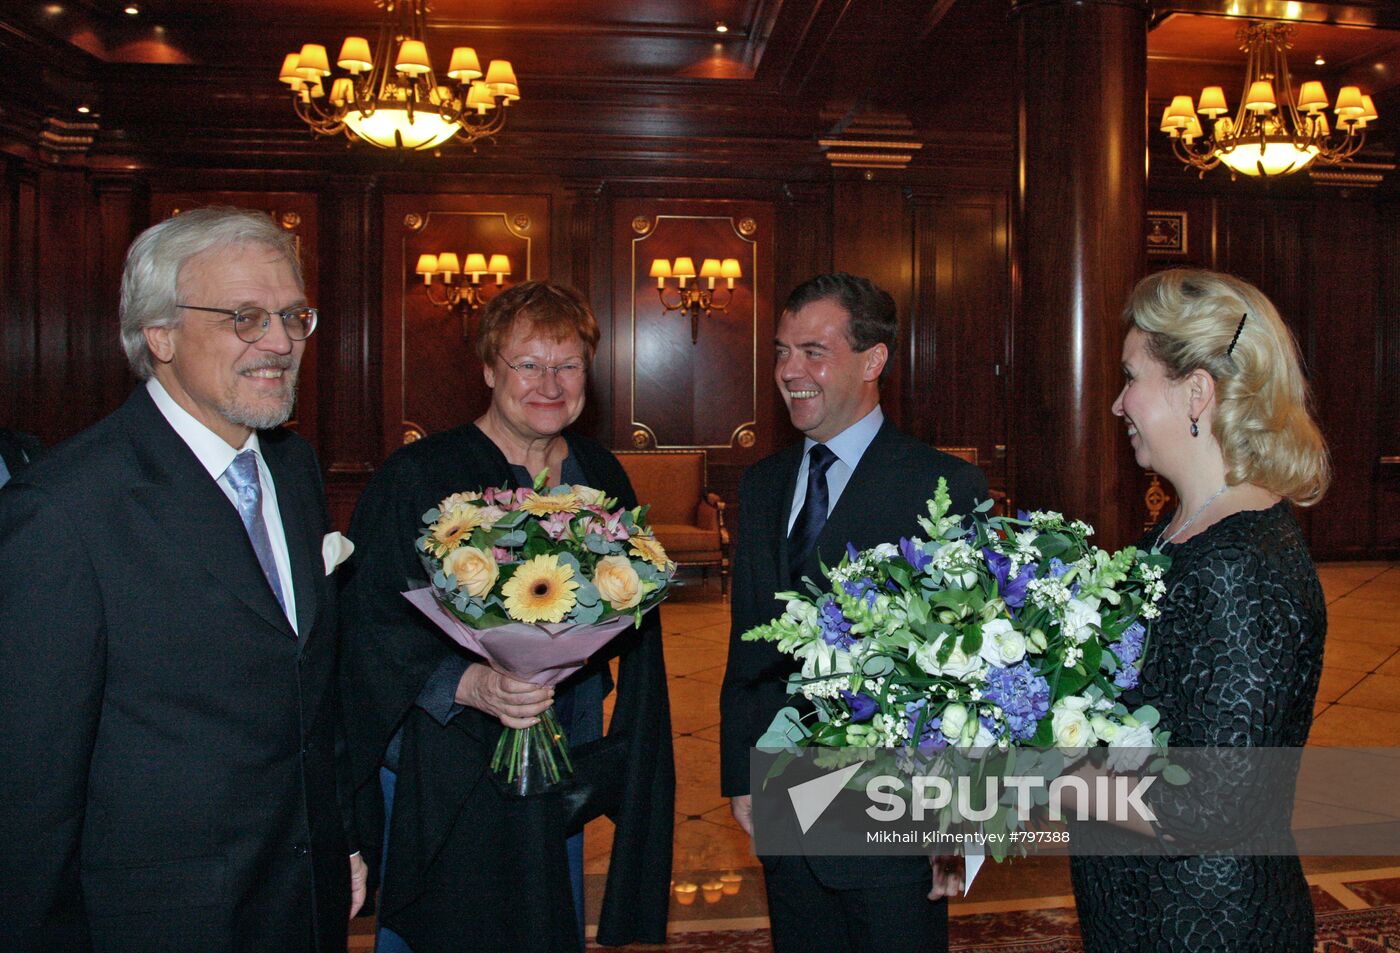 Dmitry Medvedev and Tarja Halonen